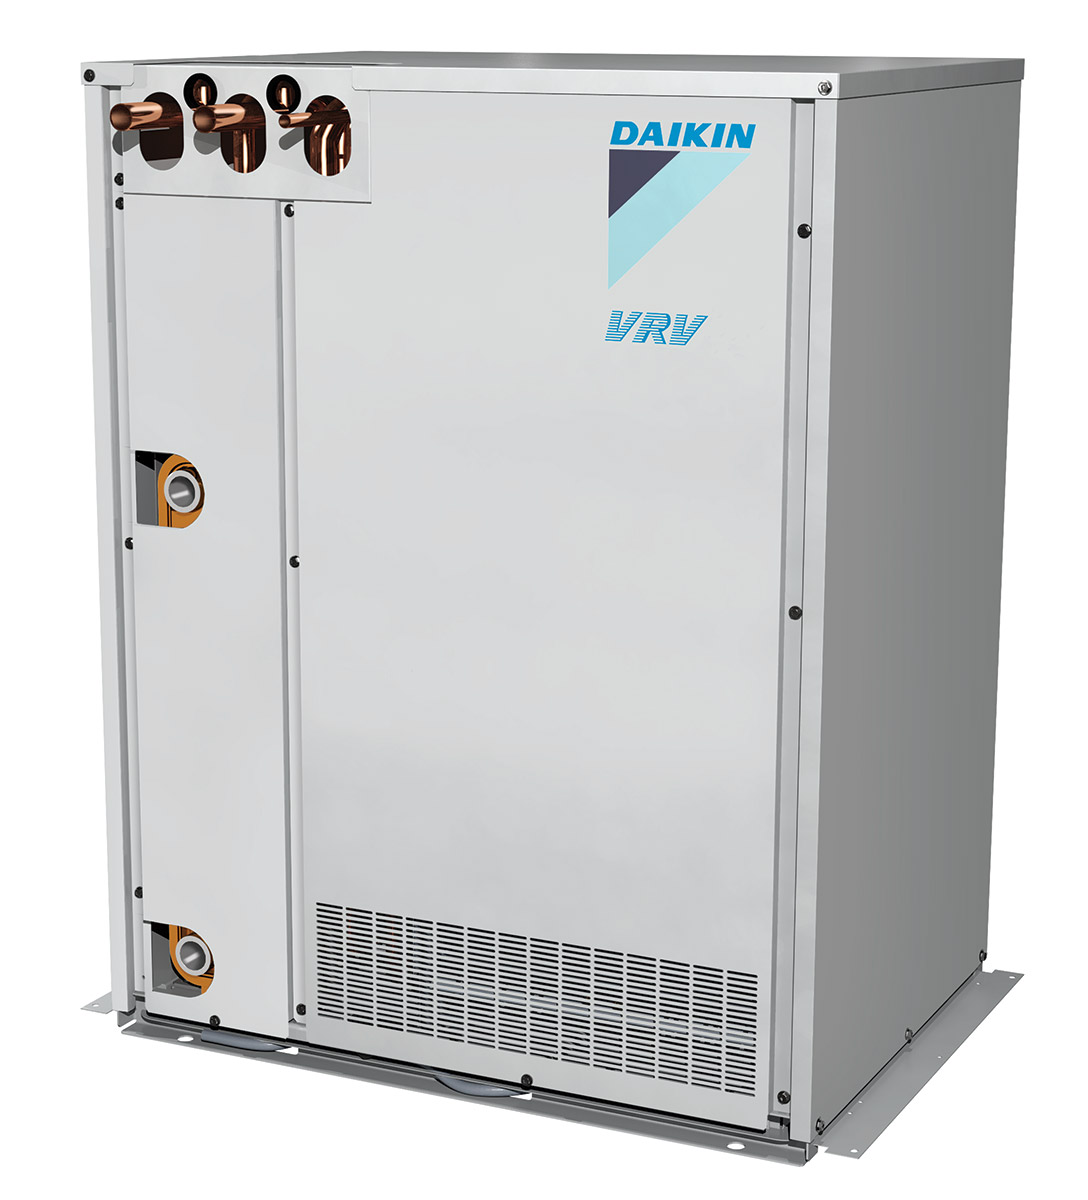 Daikin VRV-T Series Water Cooled Unit.